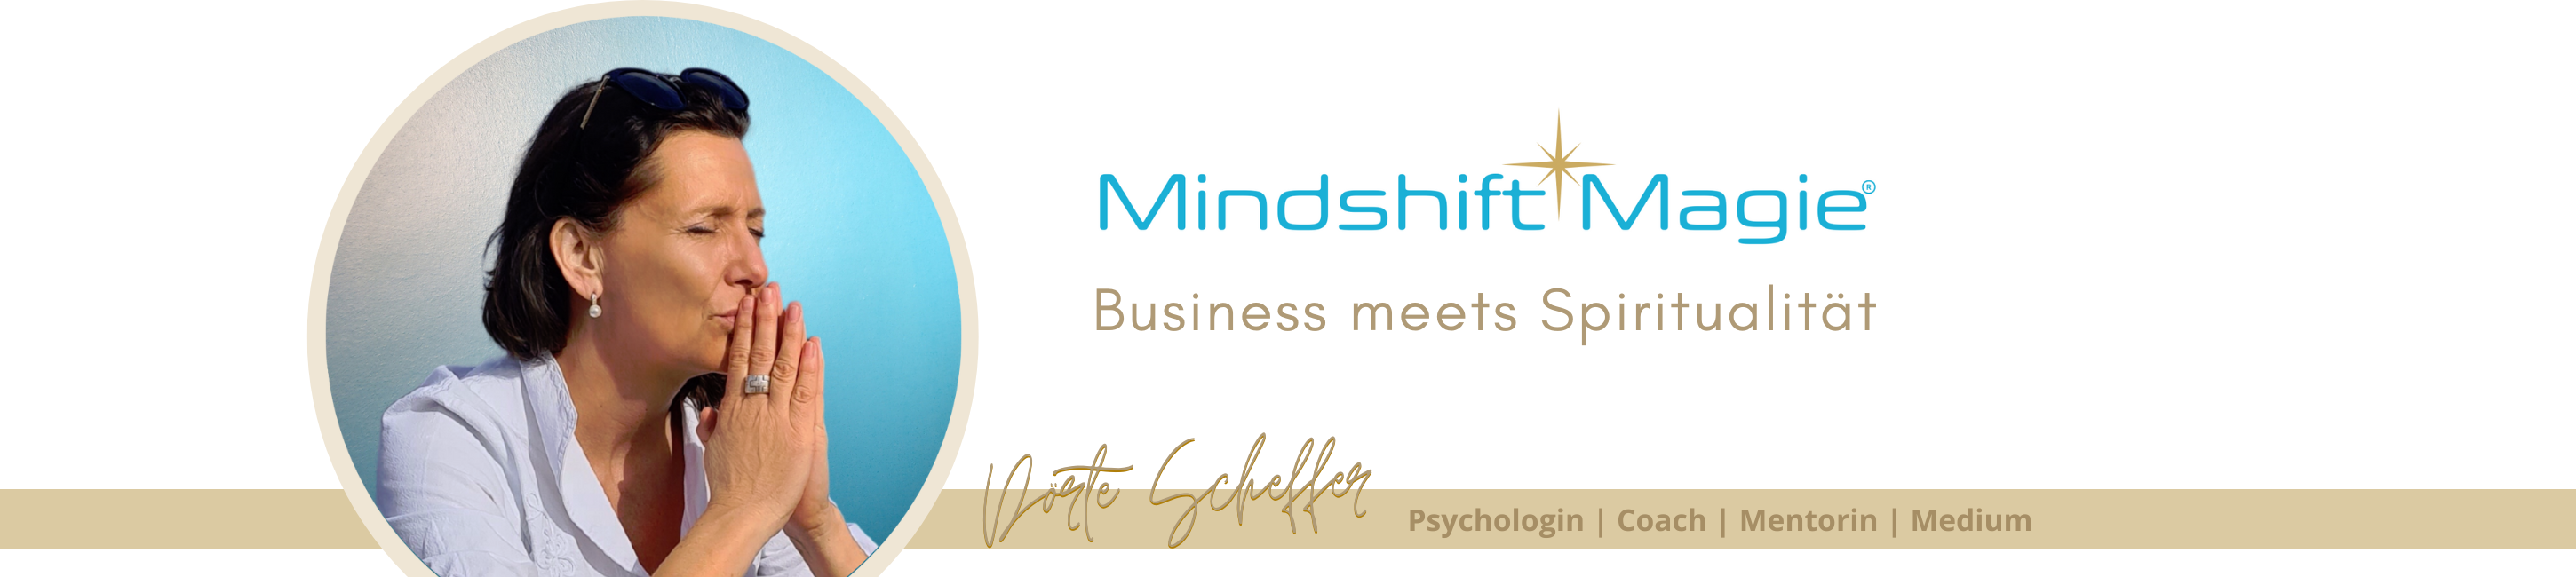 Mindshift Magie - Business meets Spiritualität by Dörte Scheffer